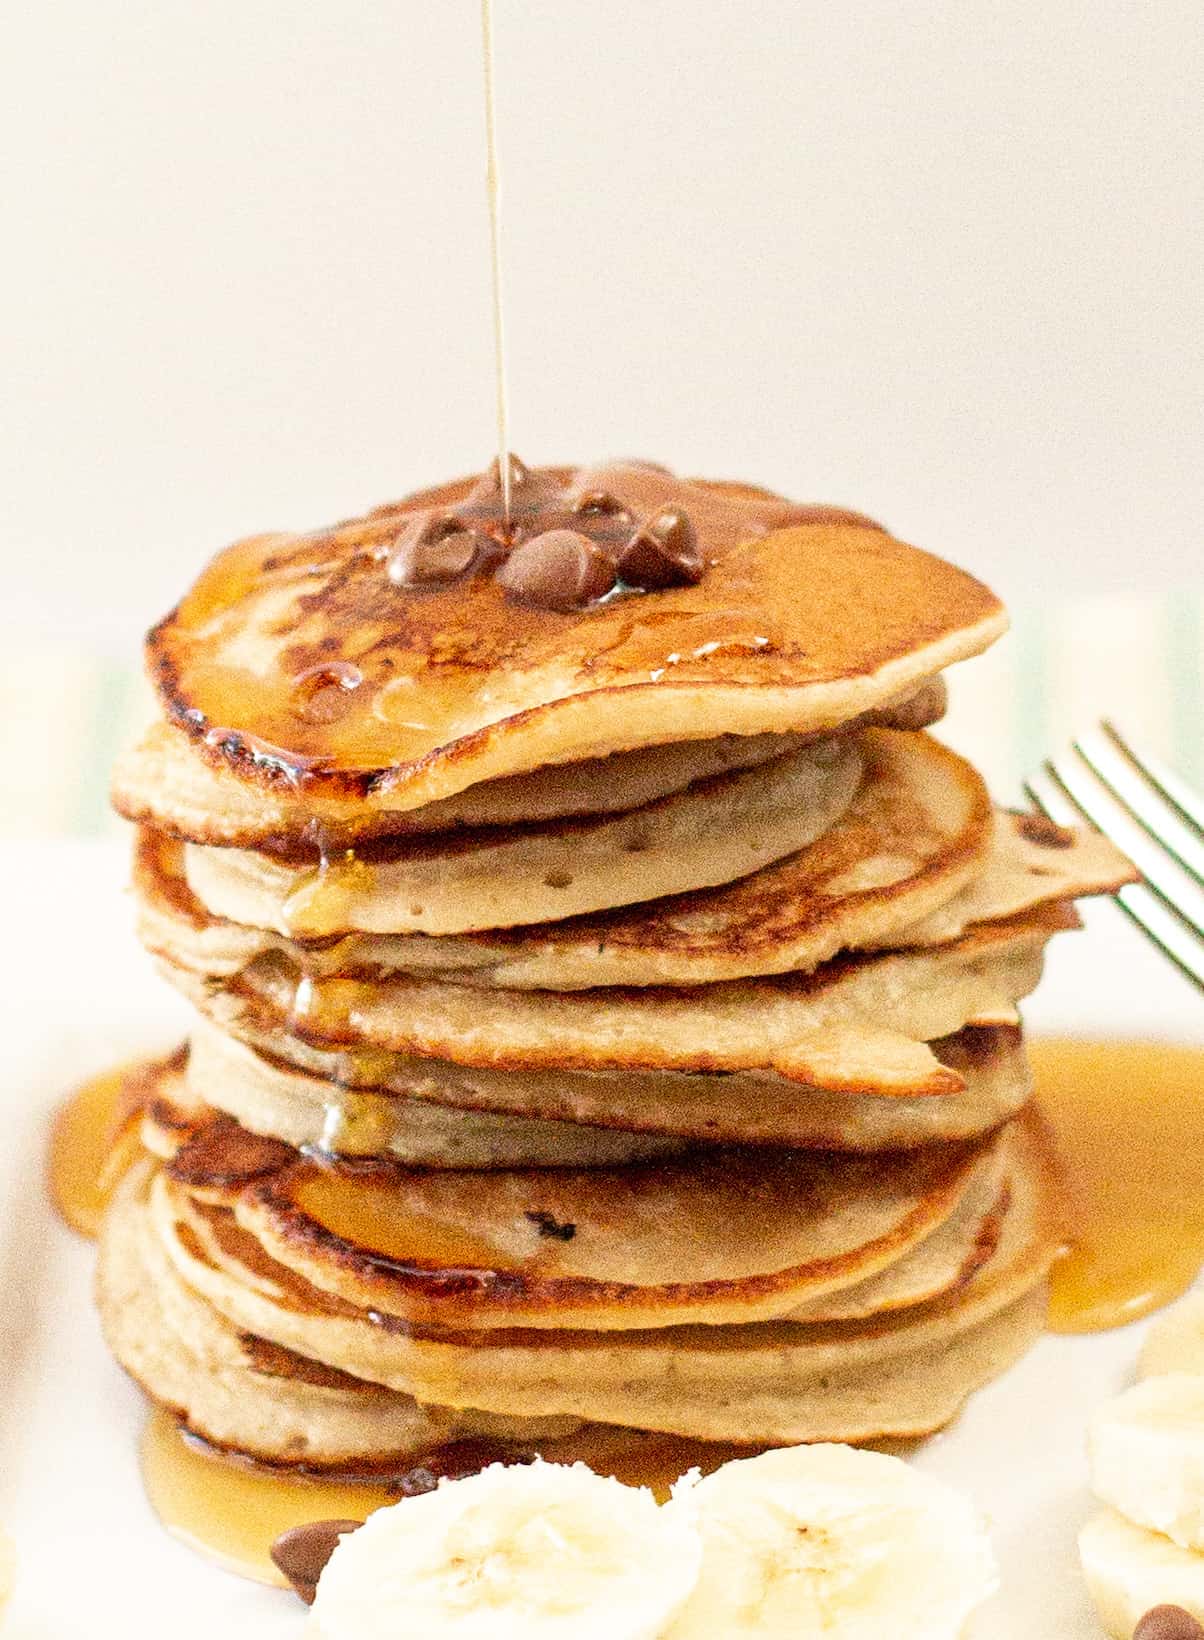 A close up of a pancake stack